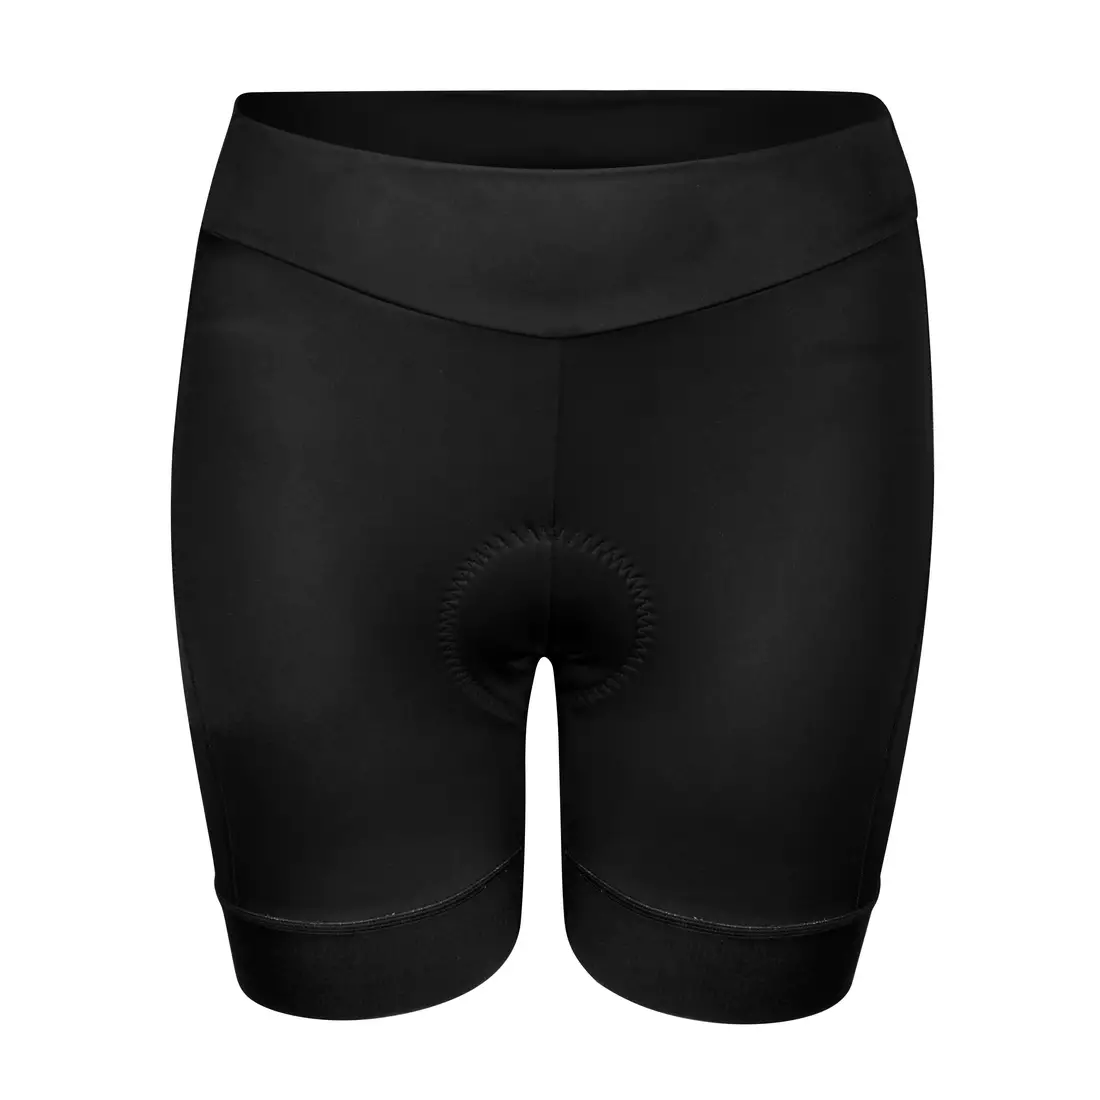 FORCE Women's cycling shorts CHARM LADY, black, 9002381